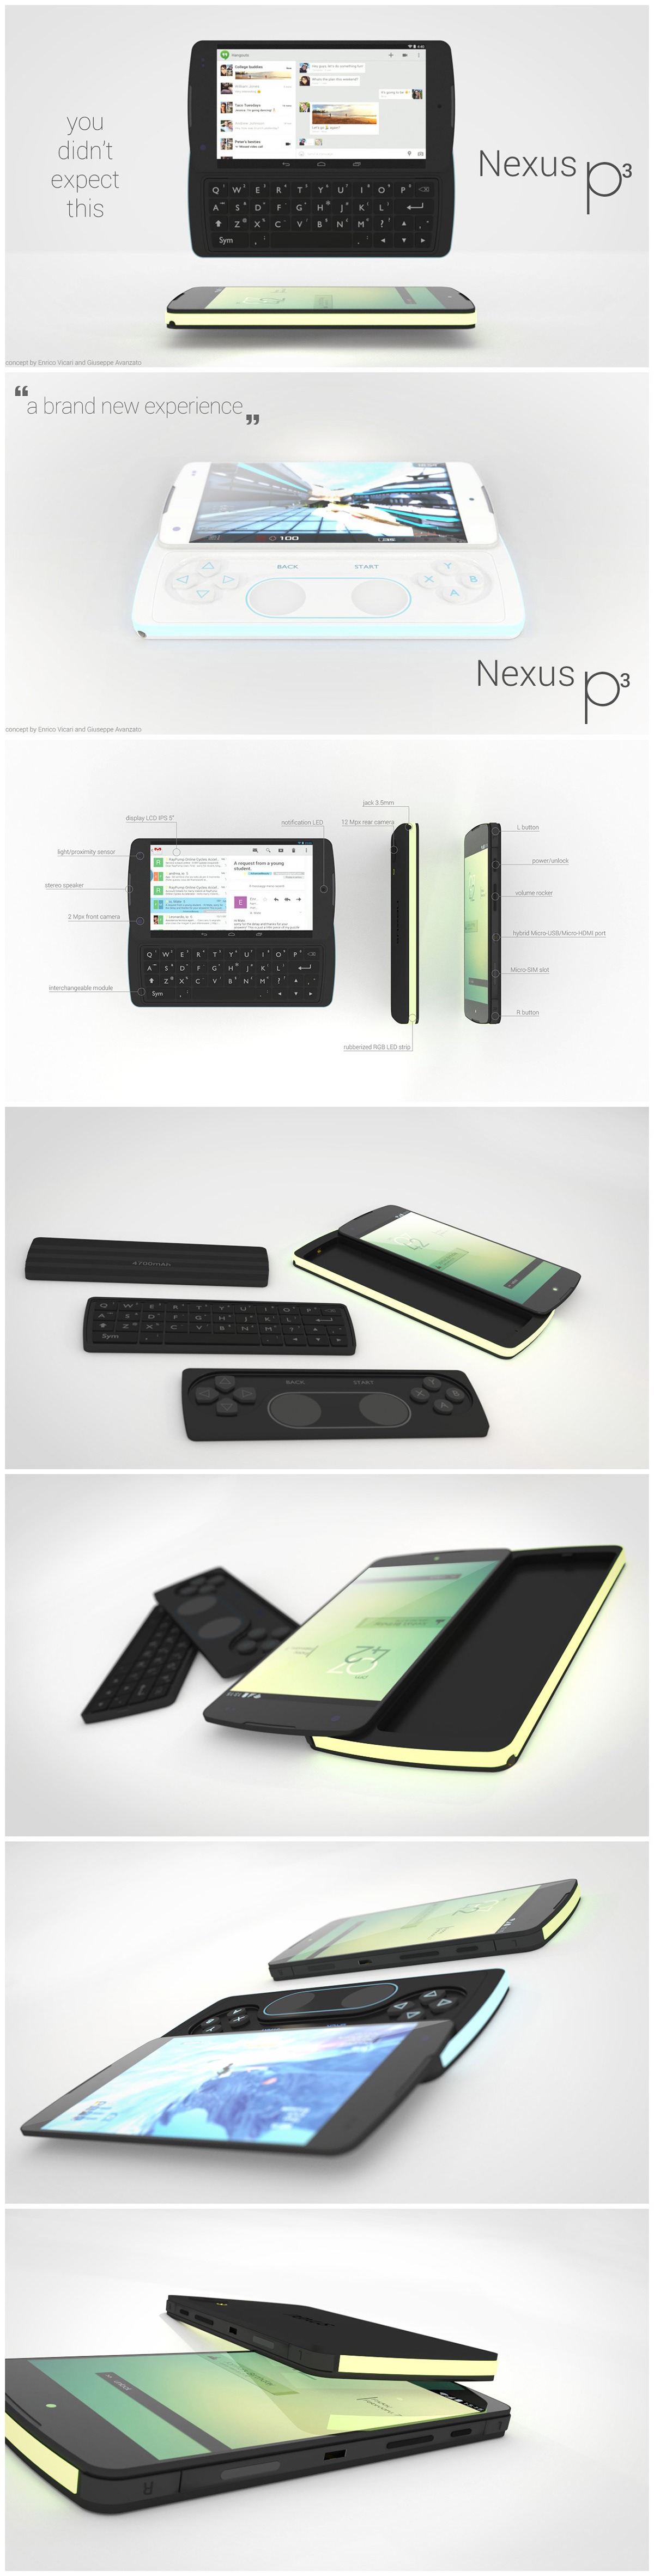 Nexus P3 nexus P3 concept design industrial phone google slide Gaming qwerty keyboard battery